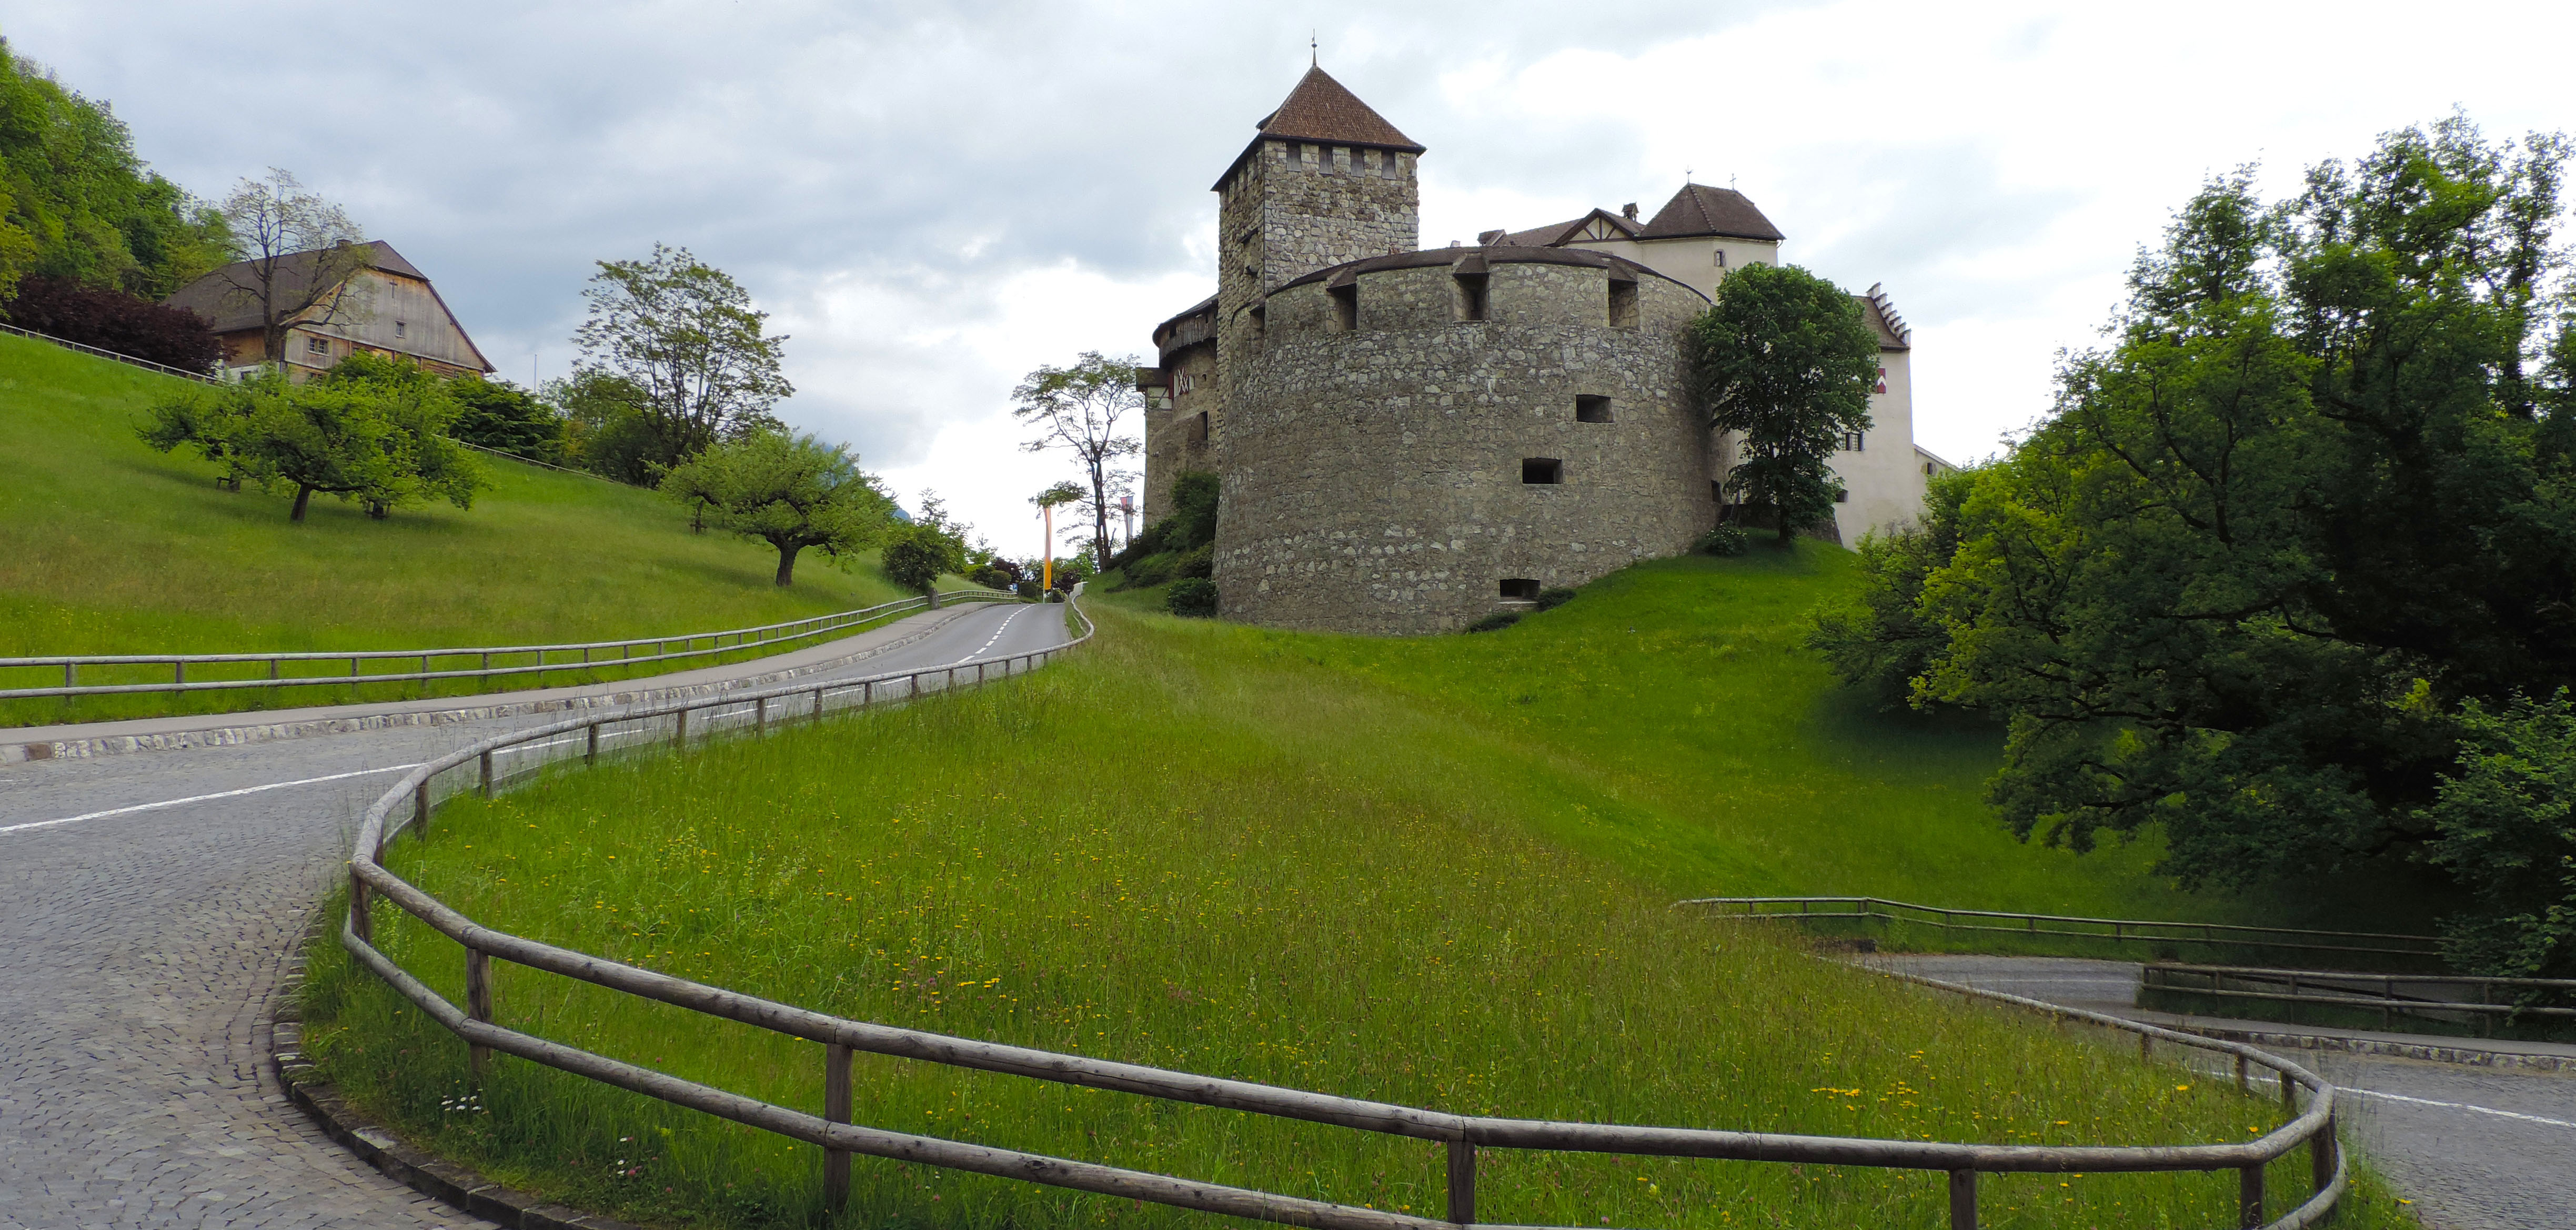 CAPA - Conhecendo Vaduz, a capital da pequena Liechtenstein